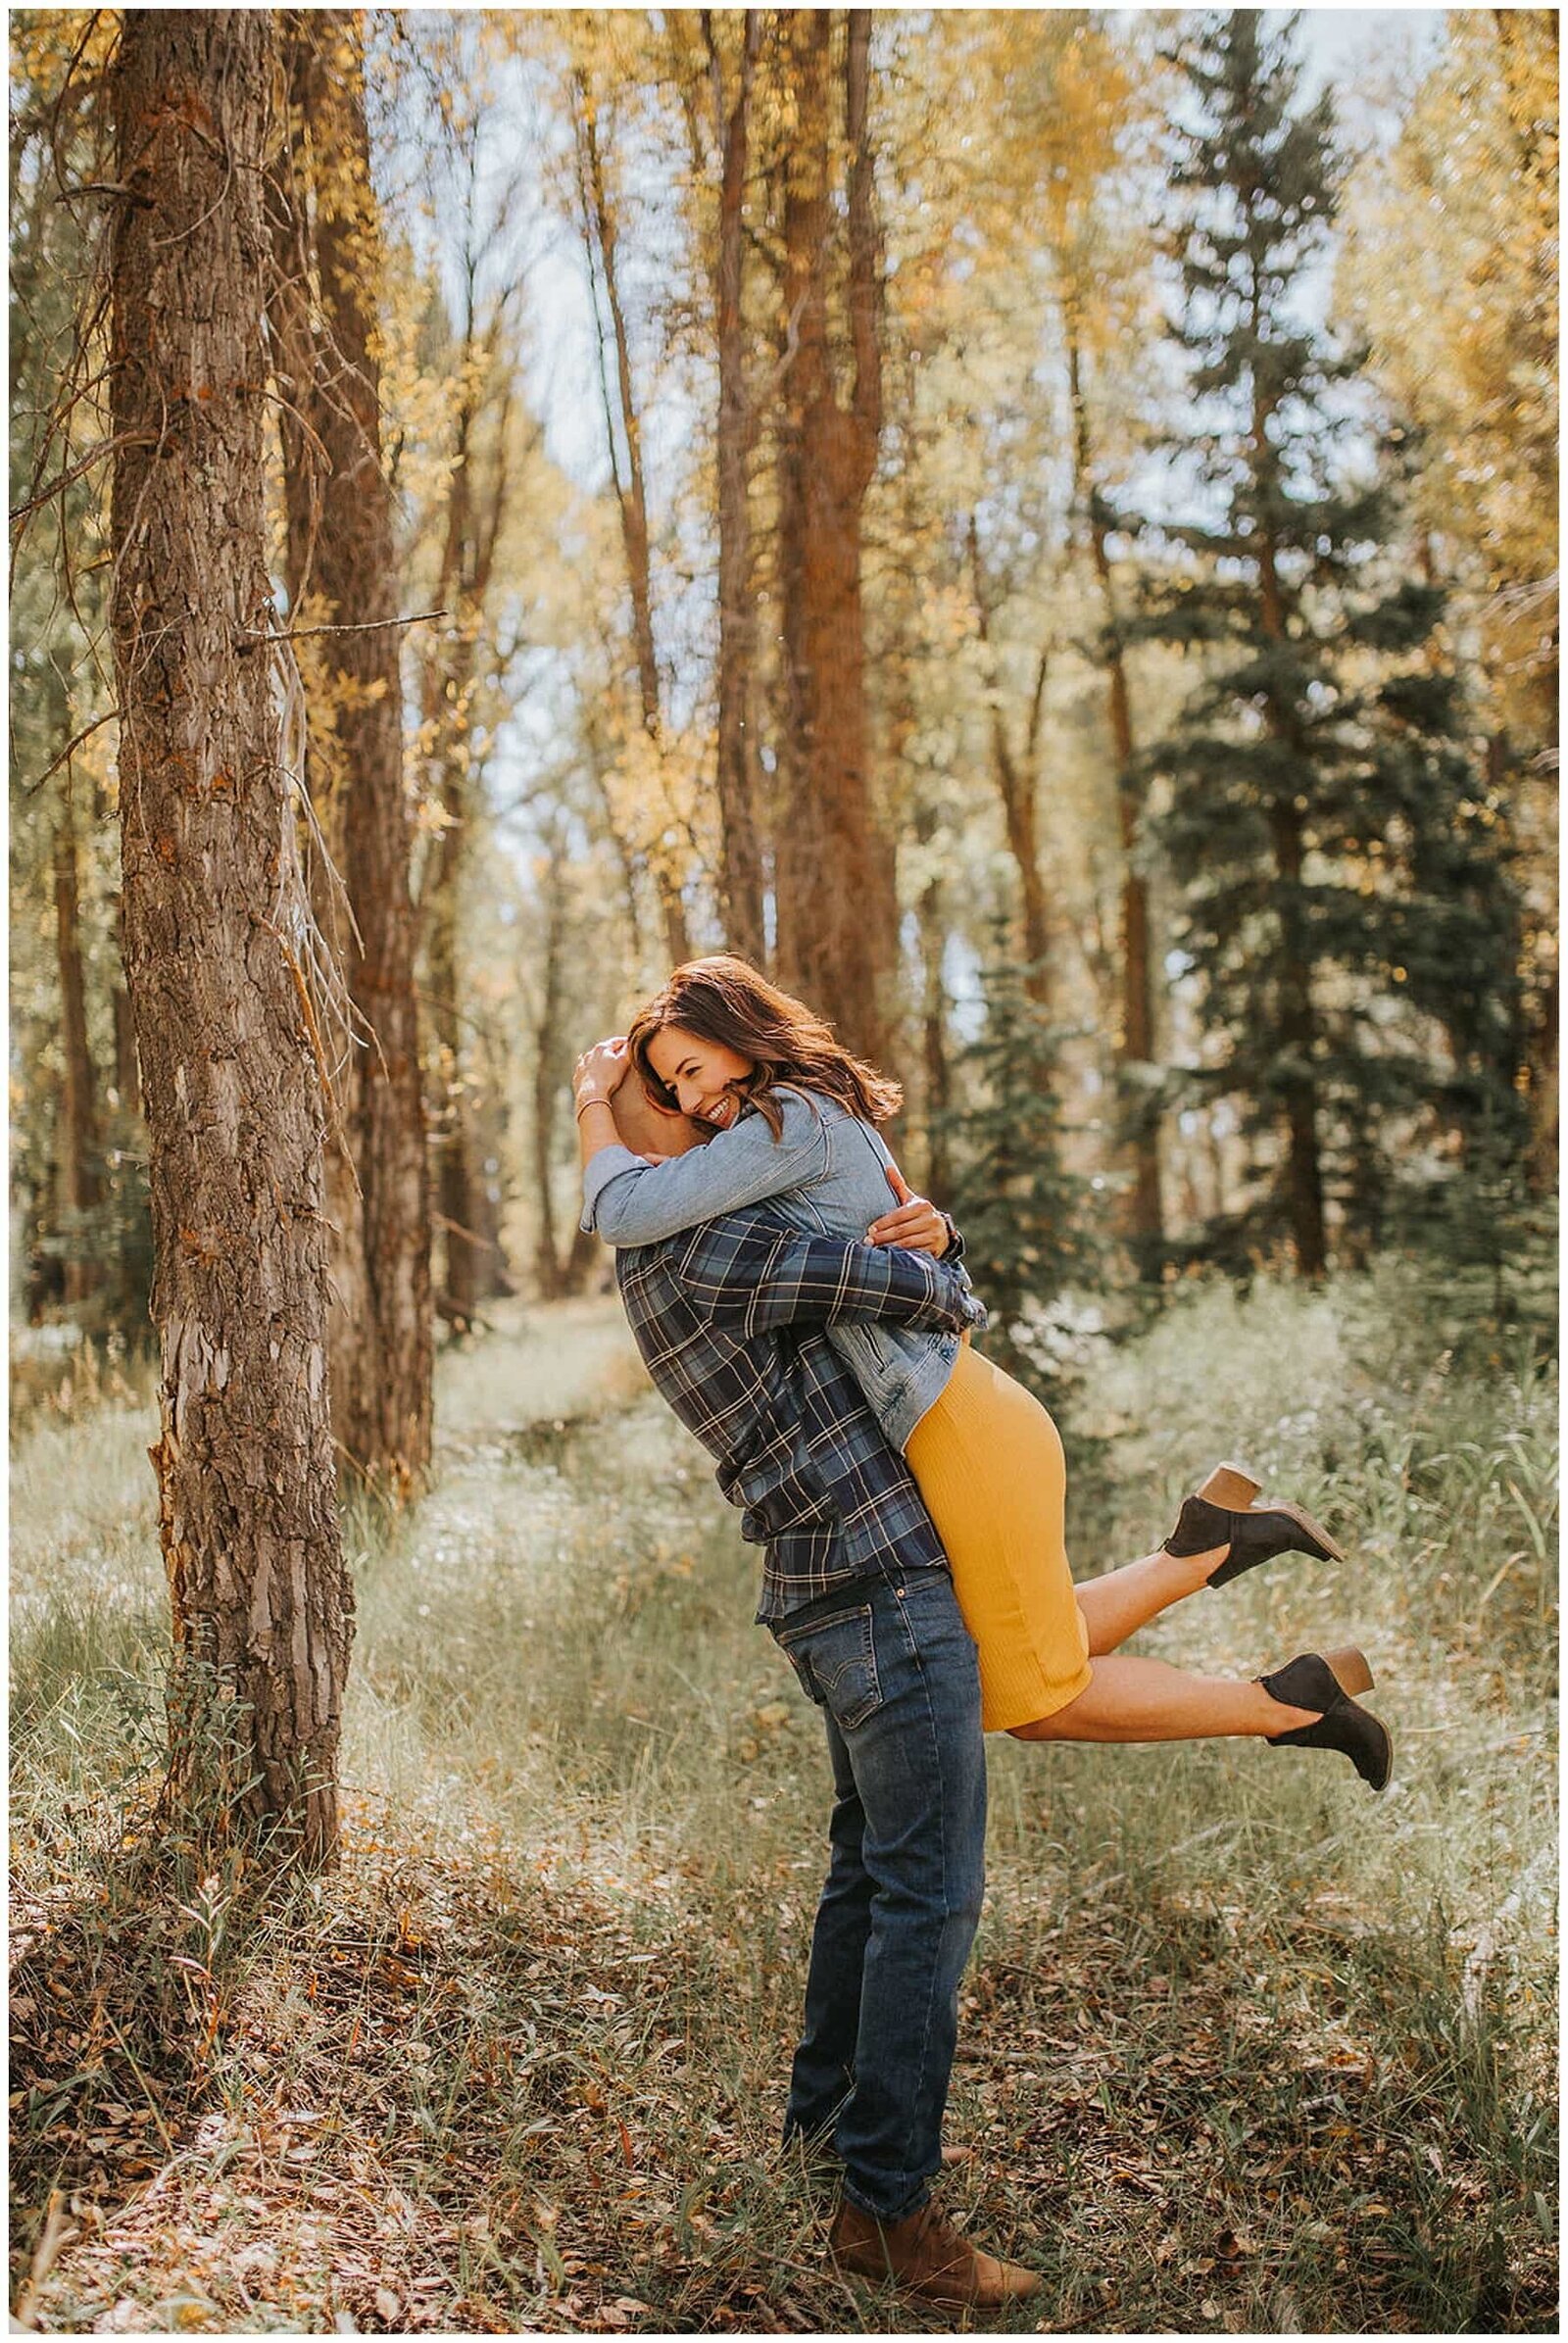 Sacramento Wedding Photographer captures man lifting woman in yellow dress during outdoor engagements